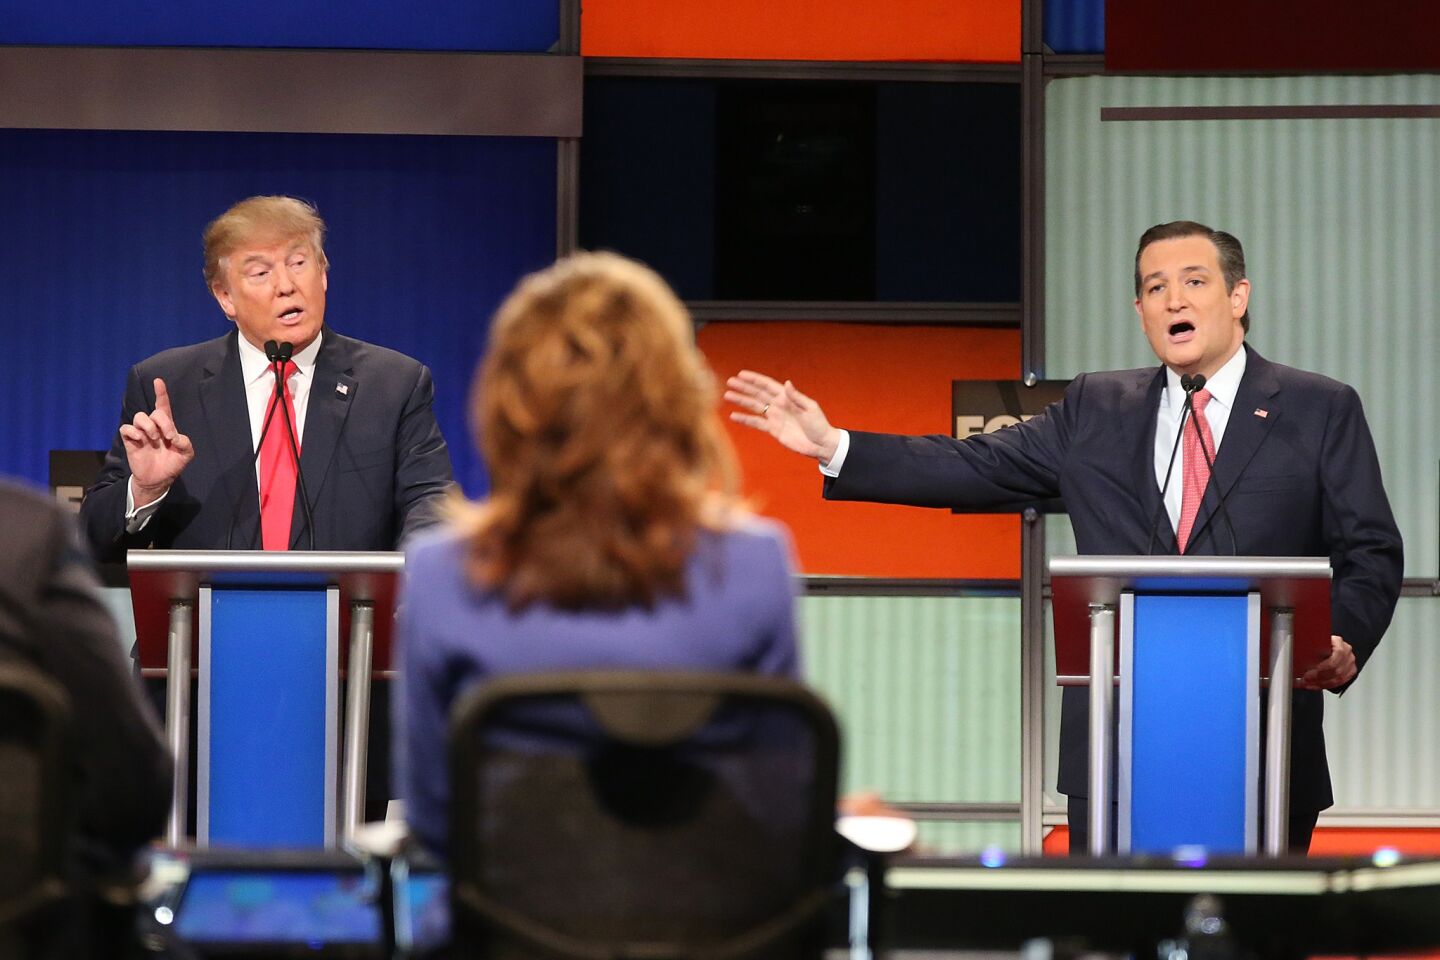 Donald Trump and Ted Cruz spar in the Republican debate.